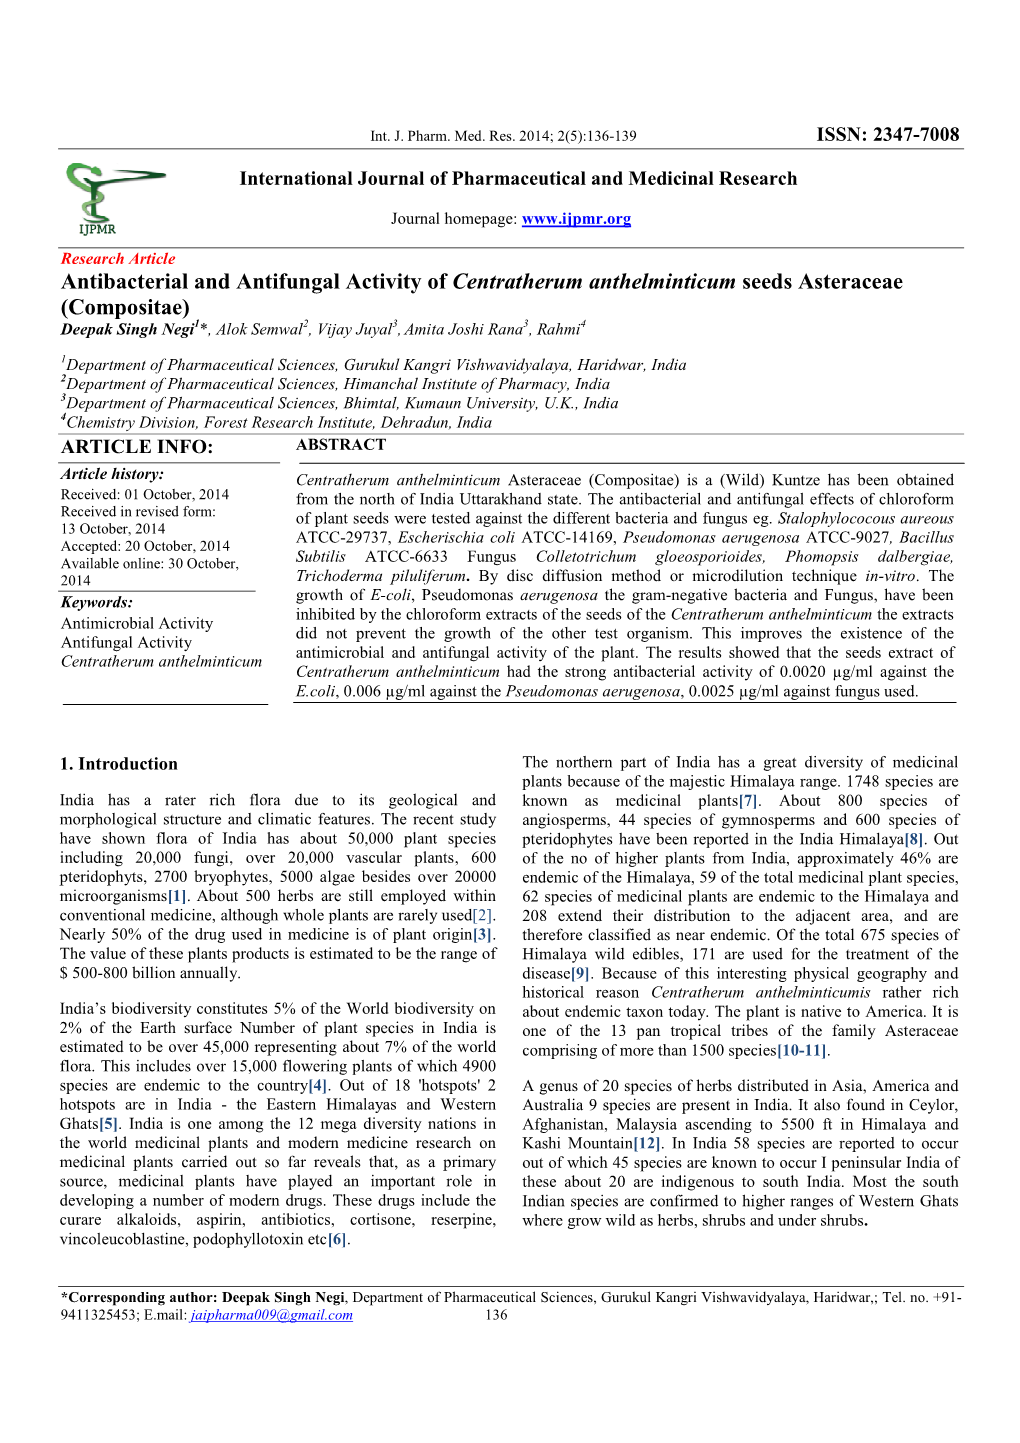 Antibacterial and Antifungal Activity of Centratherum Anthelminticum